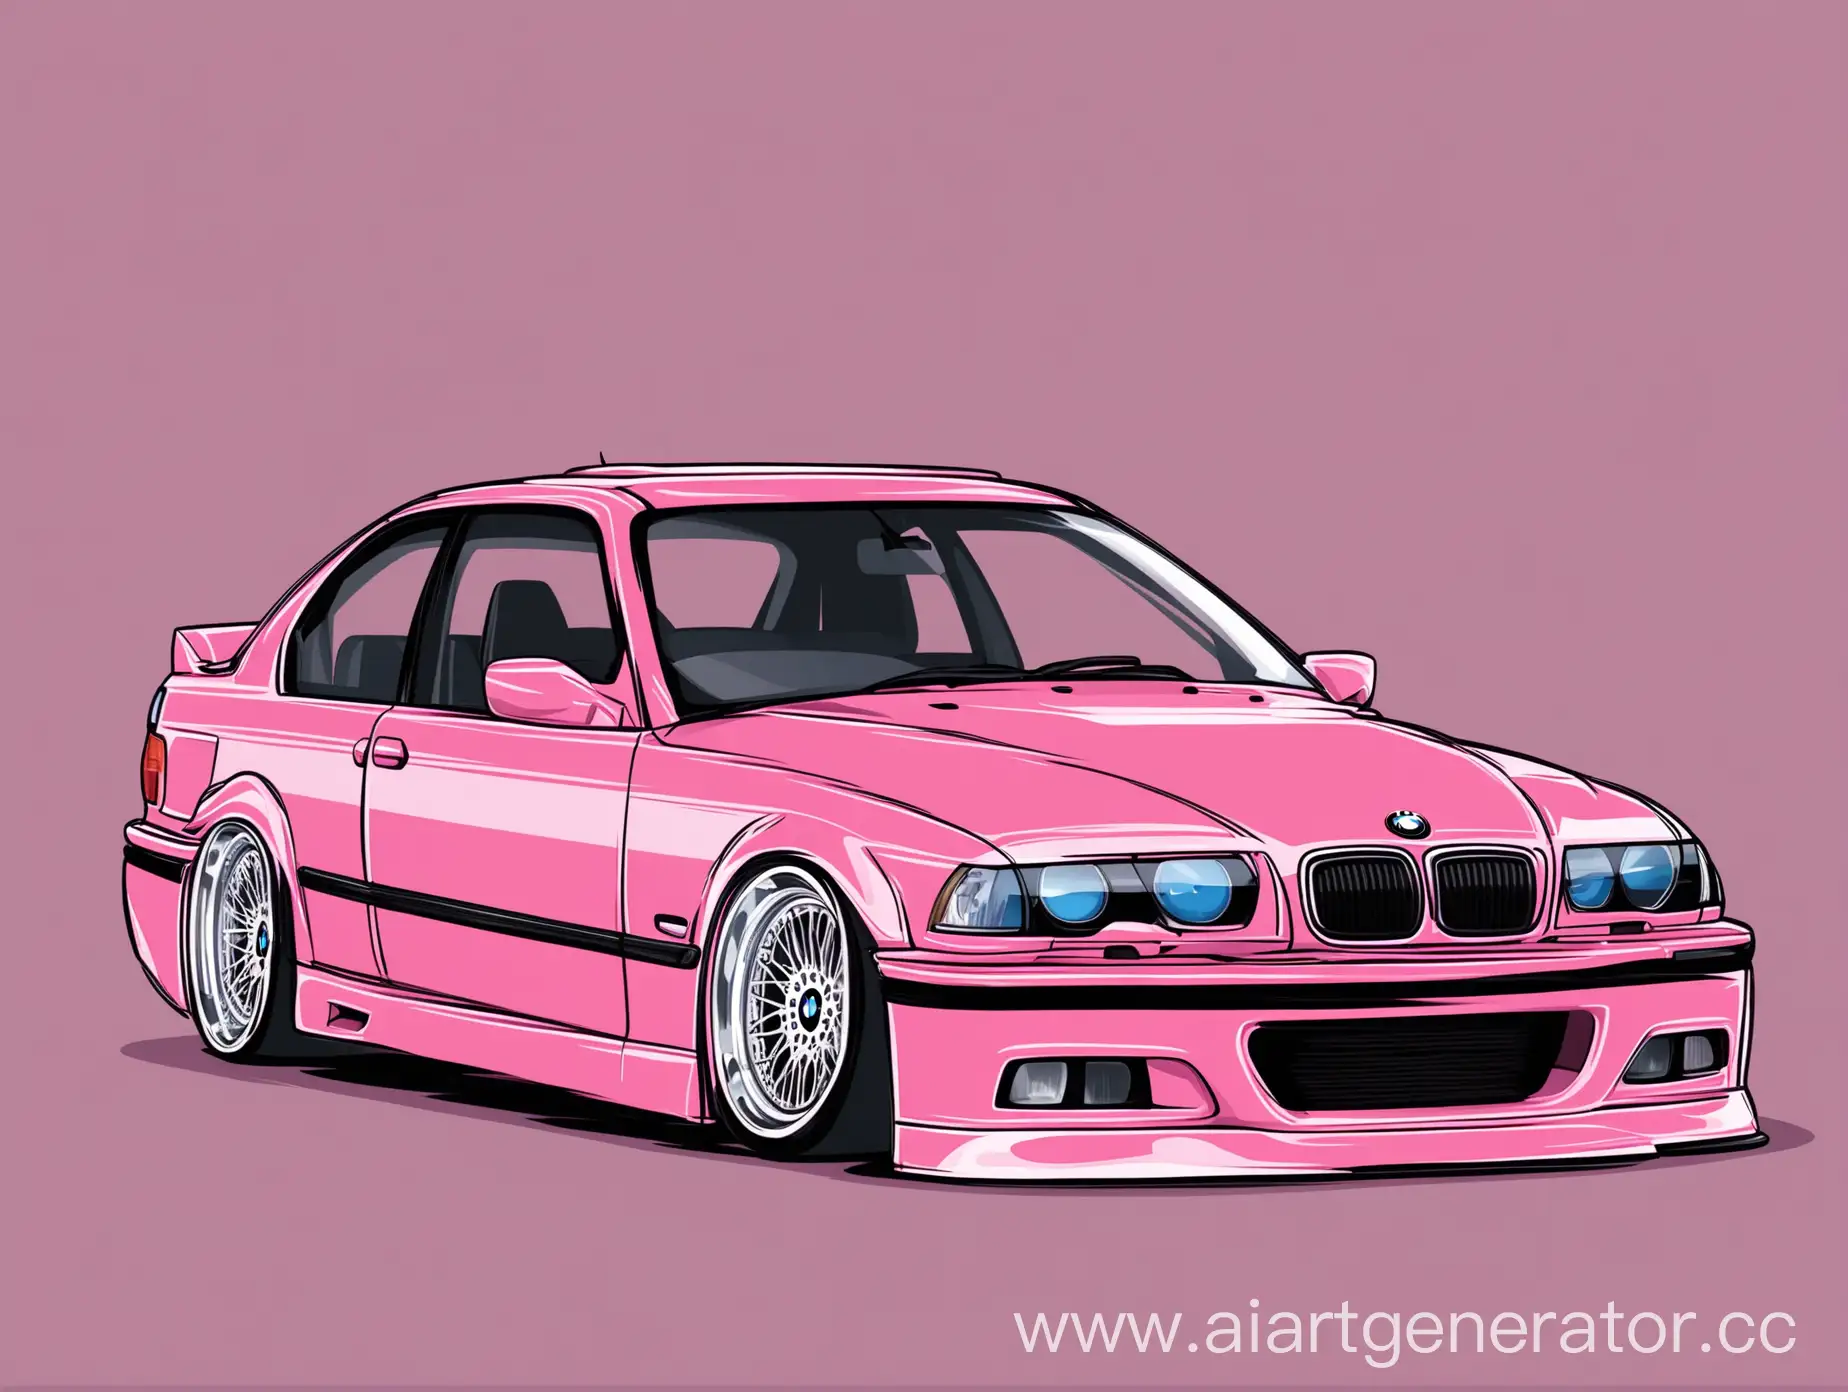 Cartoon-Style-Pink-BMW-E36-Car-Illustration